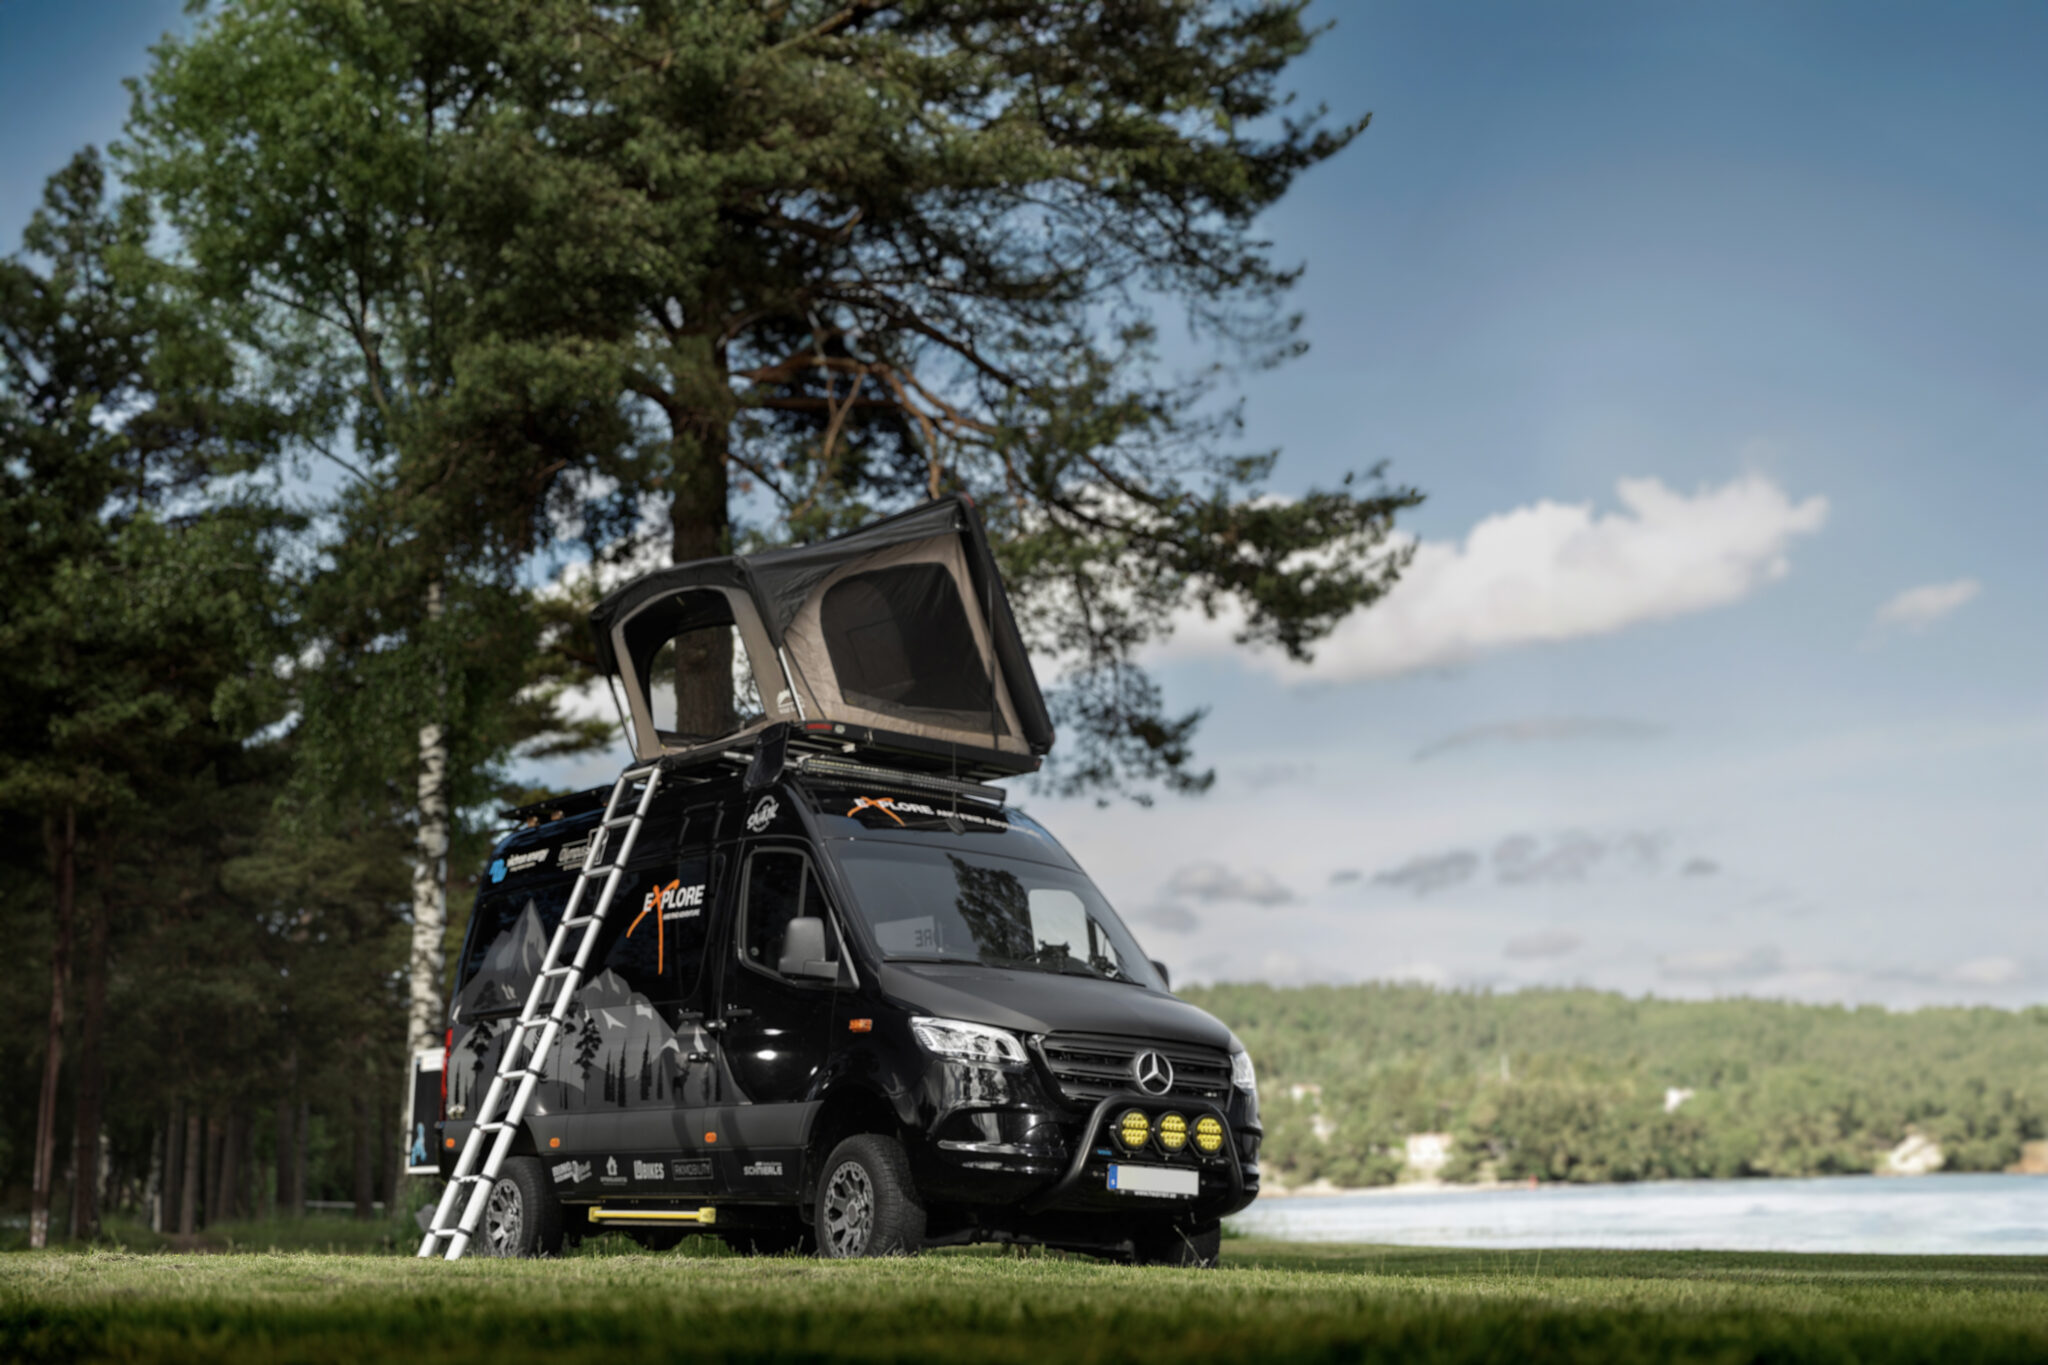 Sprinter 4x4 Expedition Camper Van